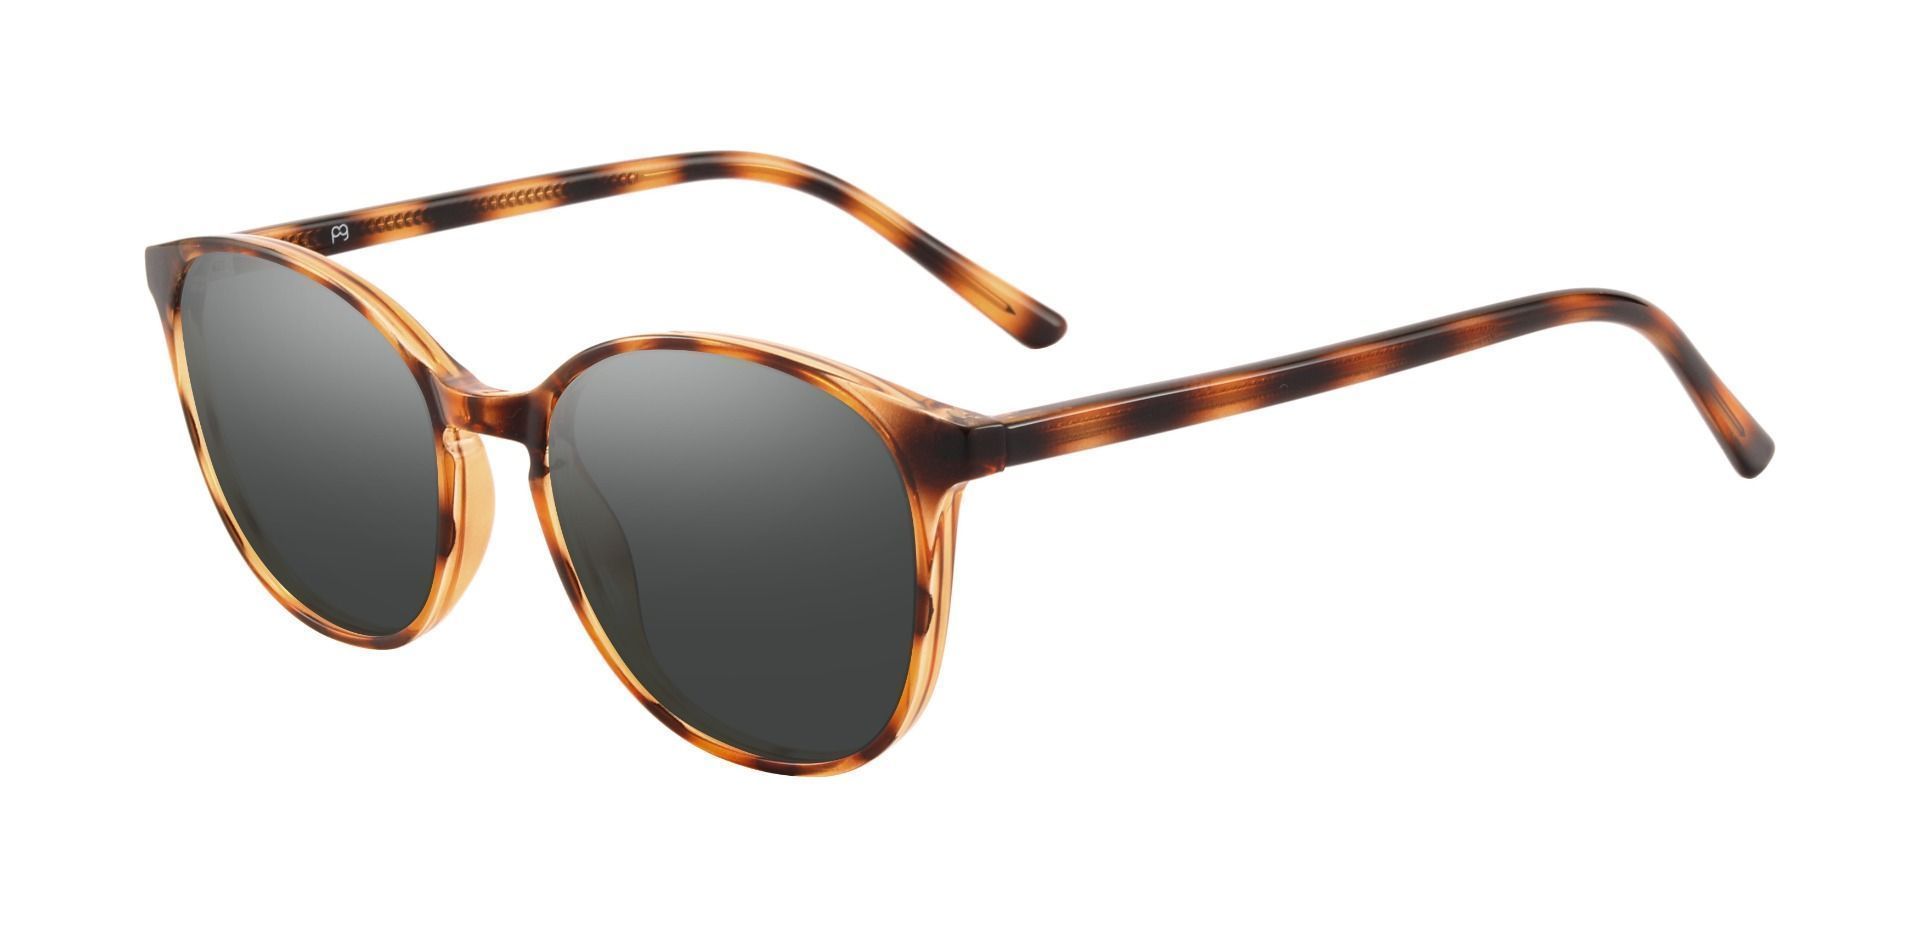 Shanley Oval Lined Bifocal Sunglasses - Tortoise Frame With Gray Lenses